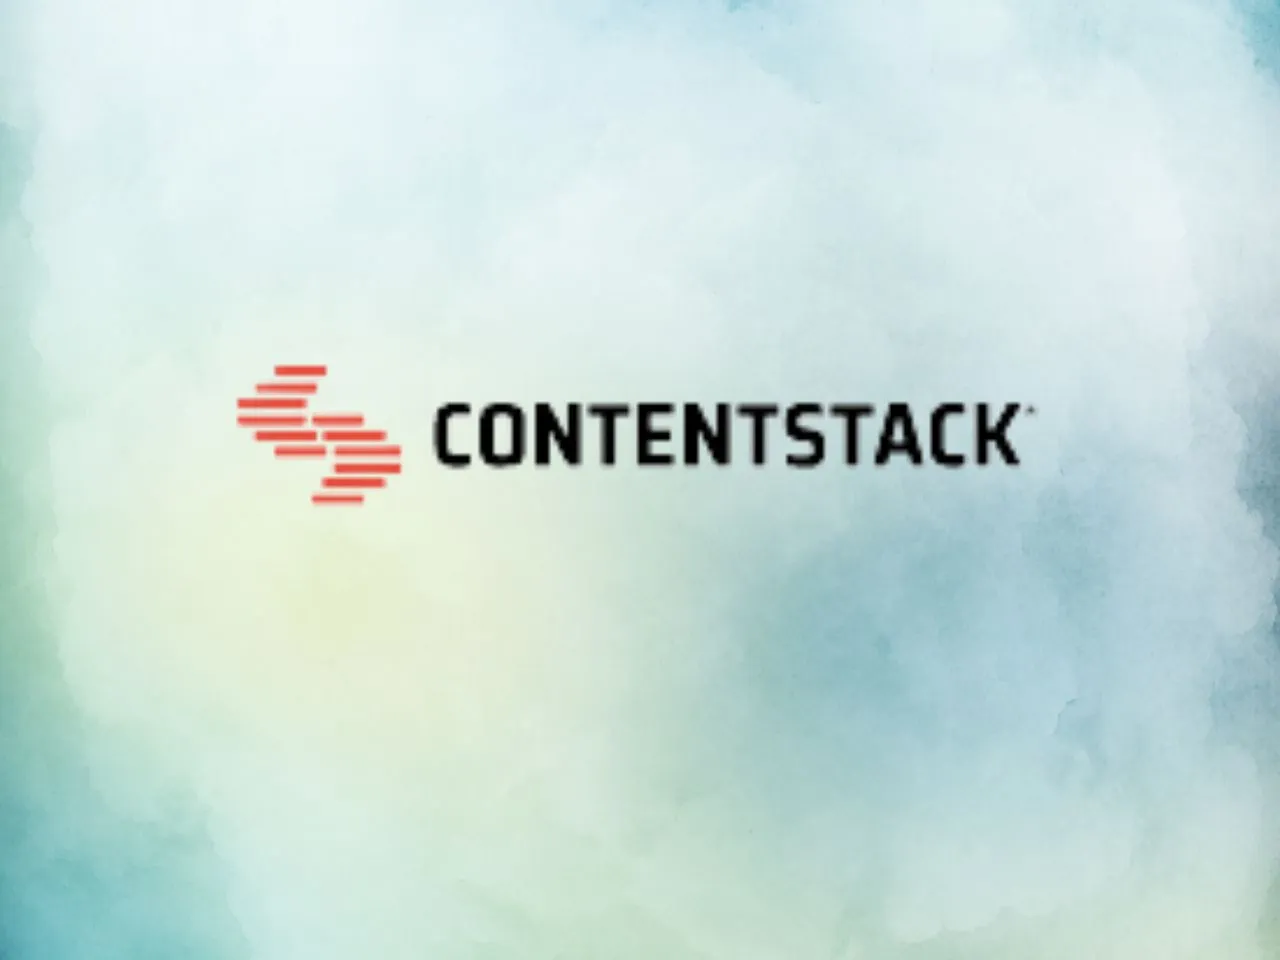 Contentstack Integrates ChatGPT into its Digital Experience Platform